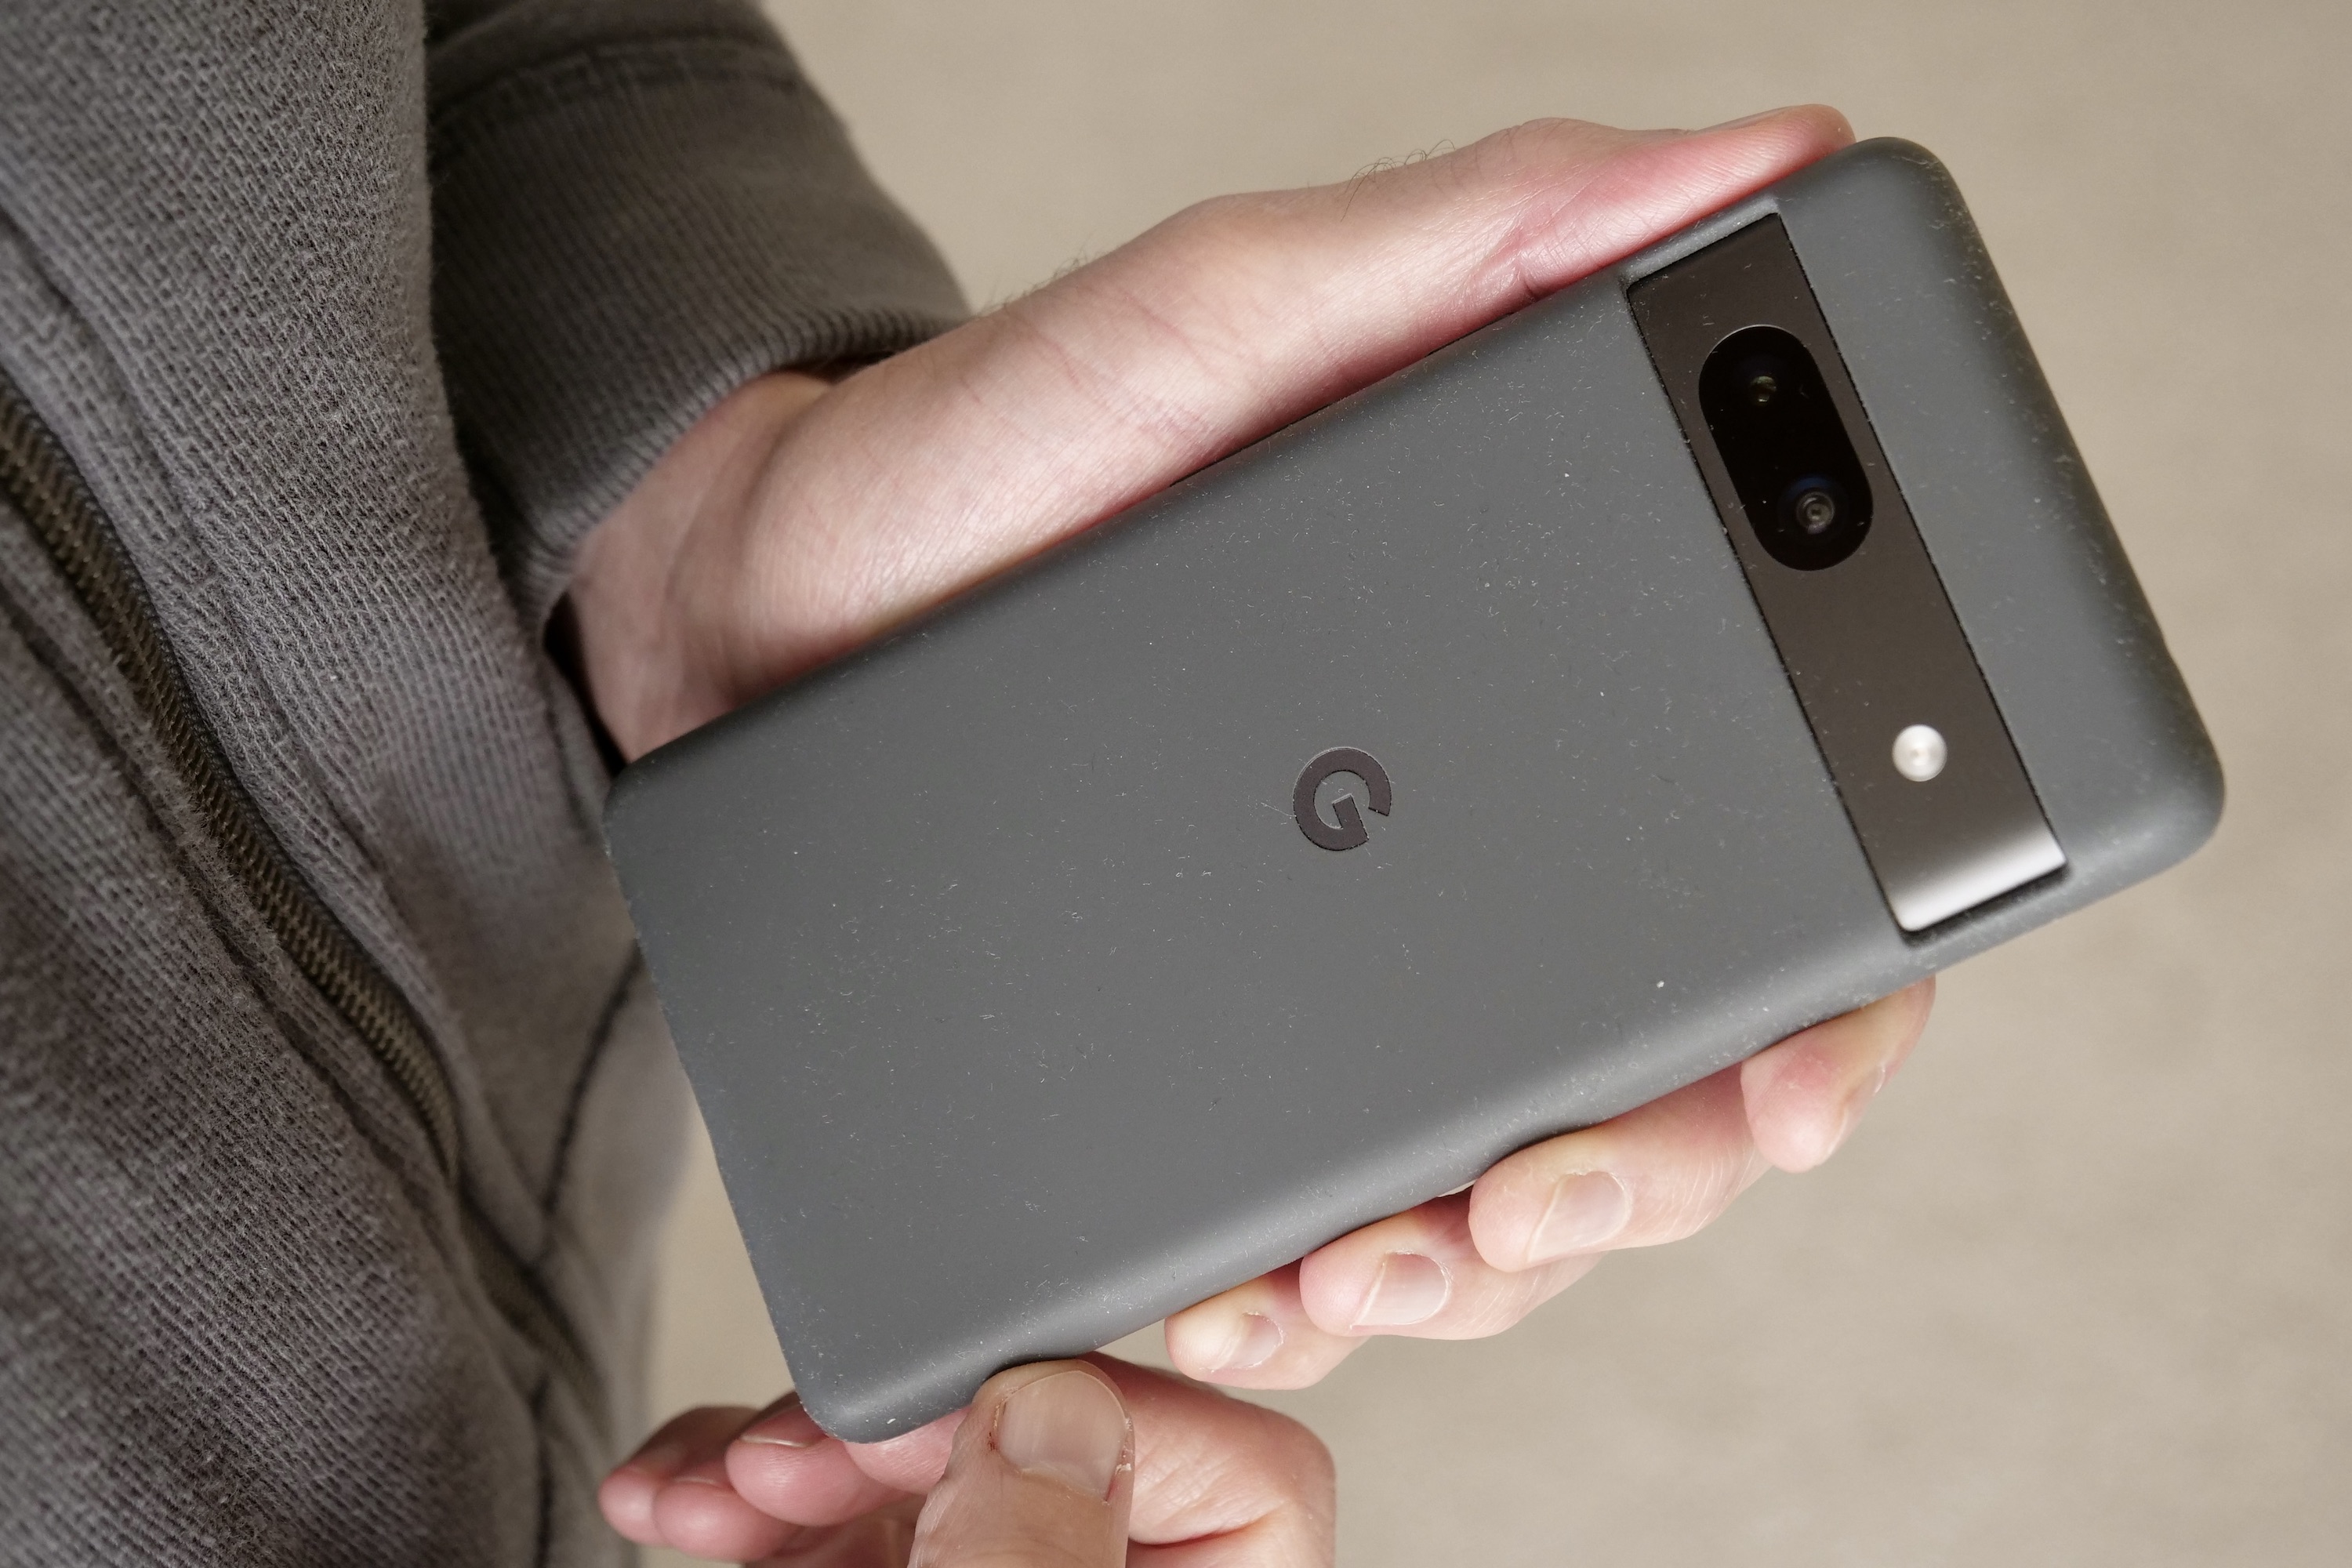 Google Pixel 7a Case - Charcoal